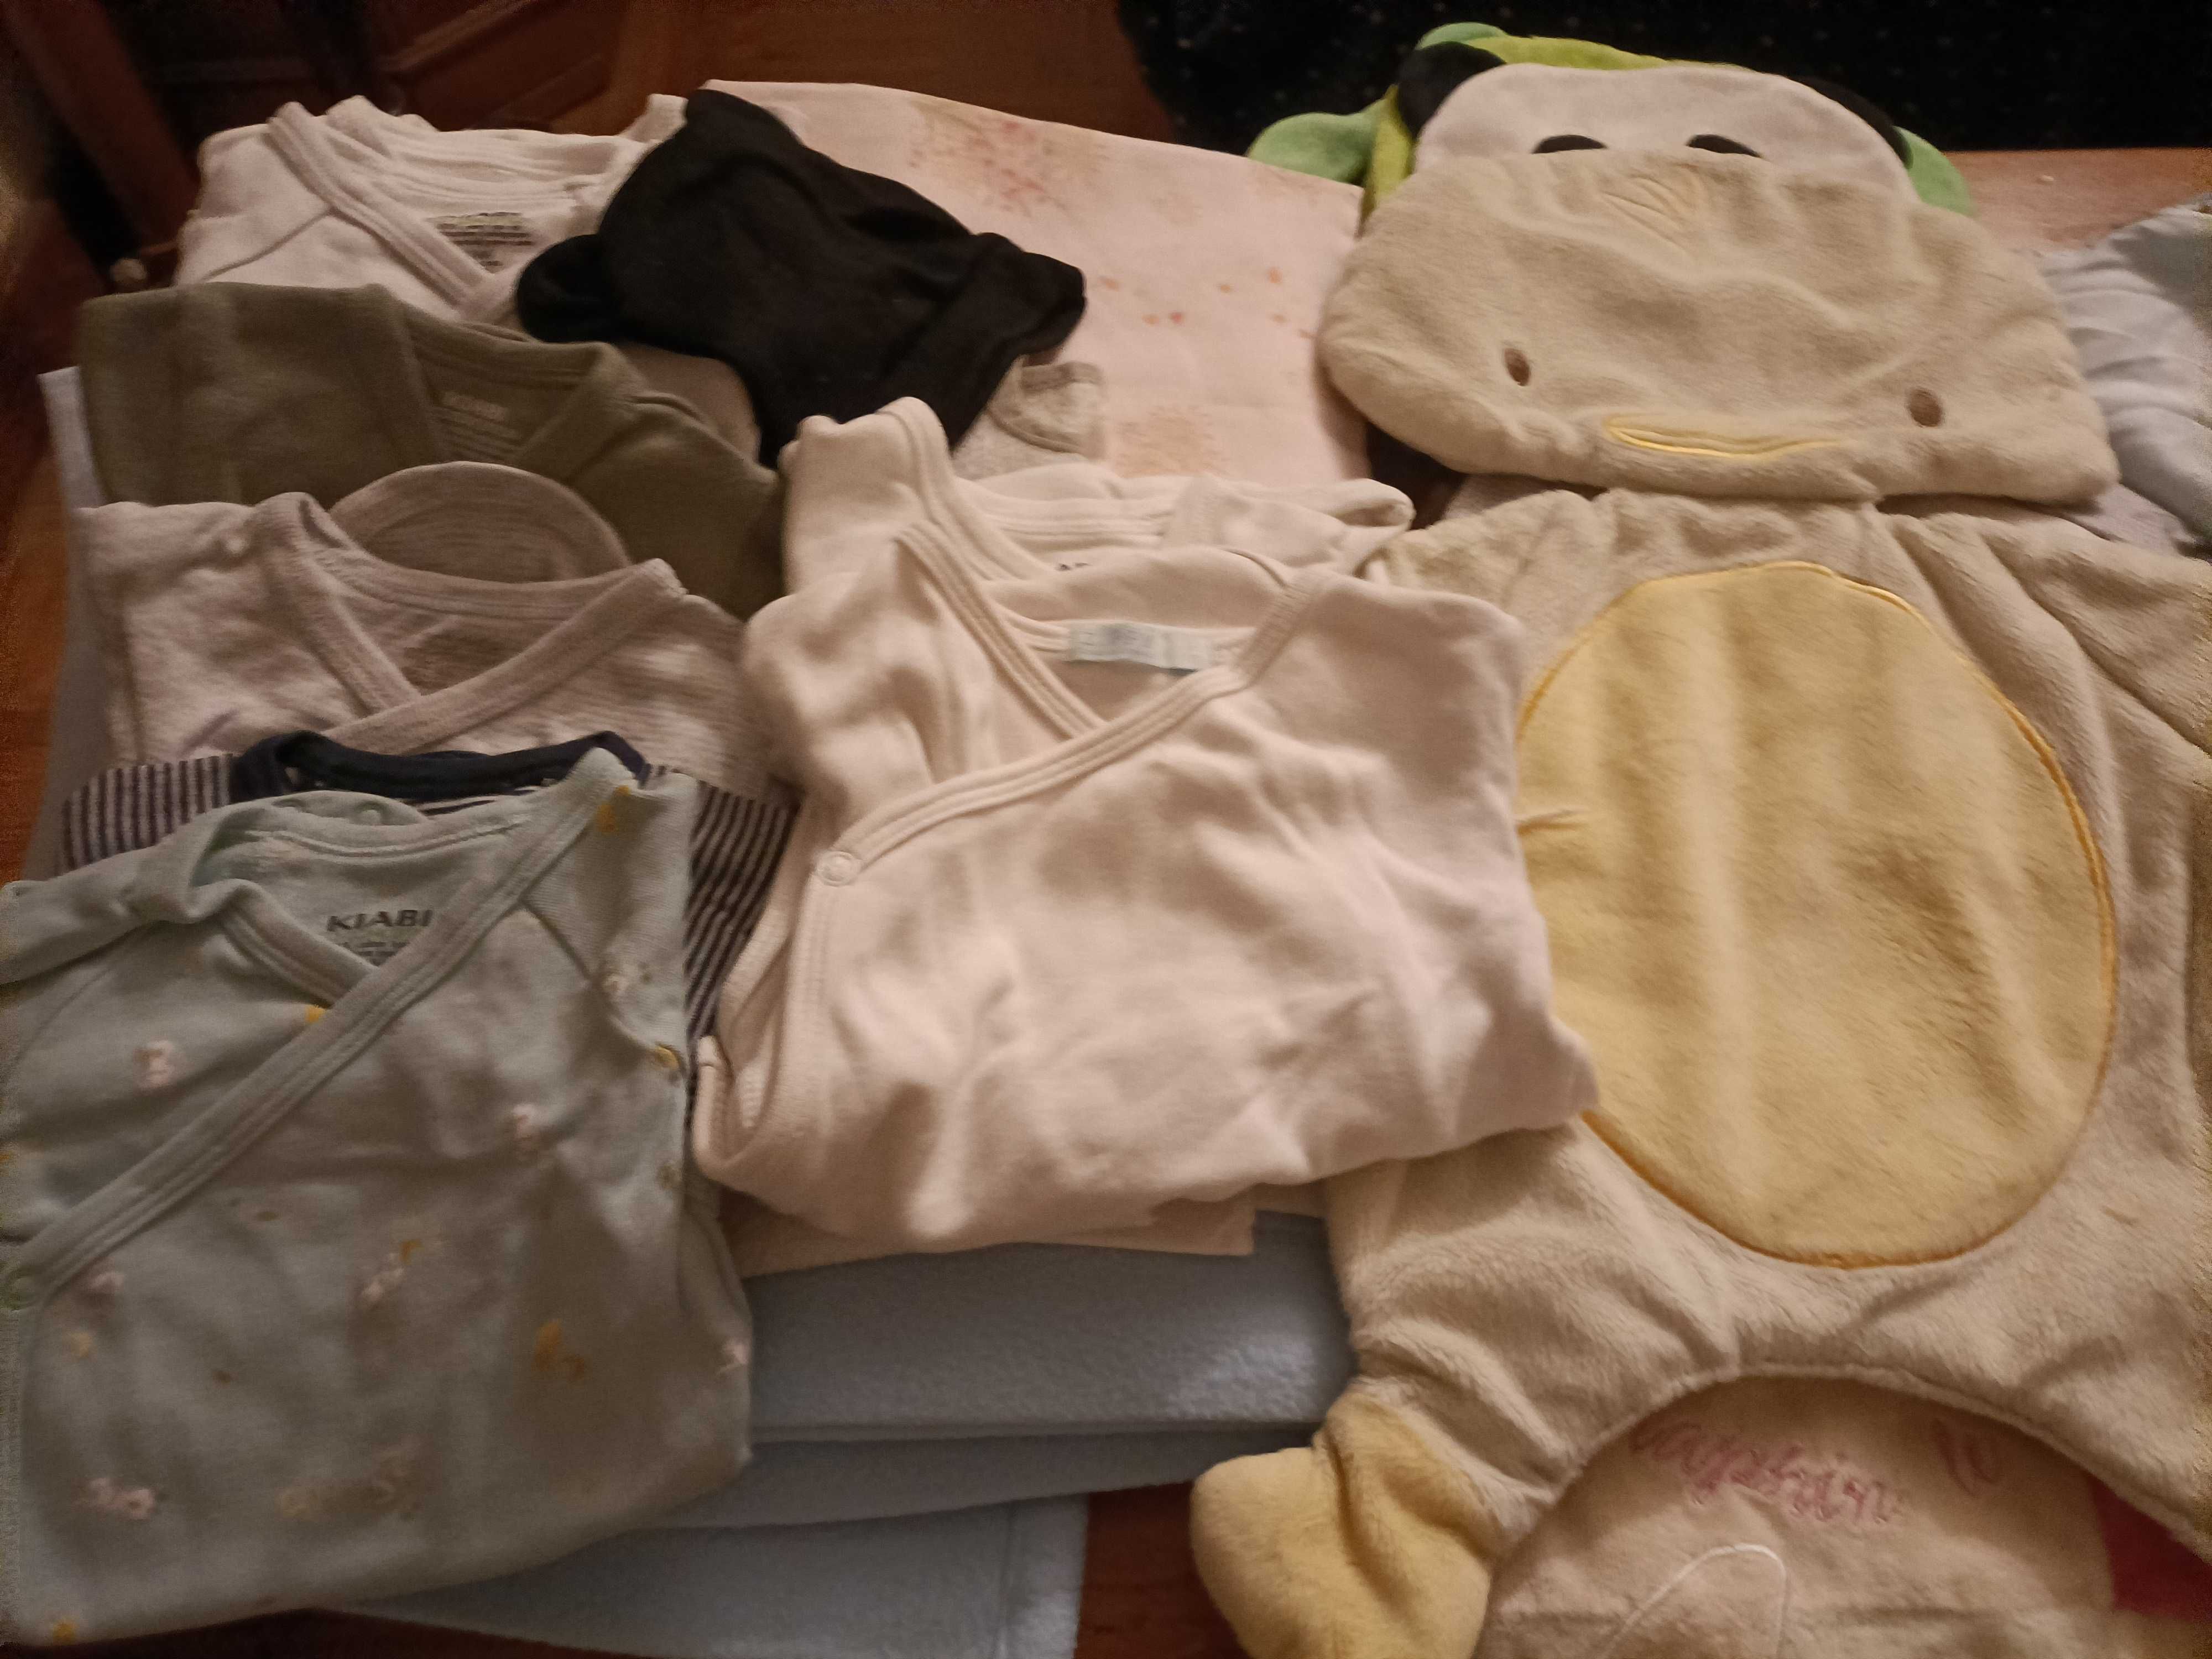 Lote de roupa de menina, lençóis, e bebetes